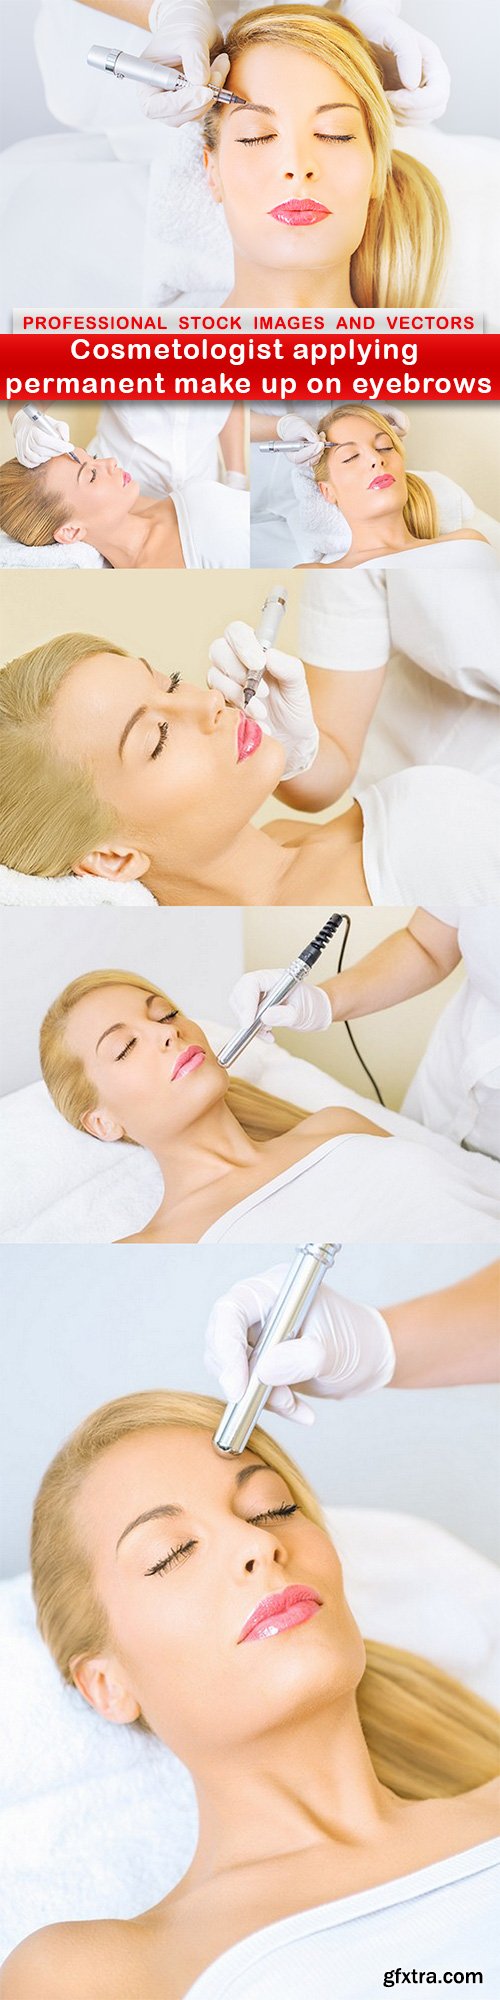 Cosmetologist applying permanent make up on eyebrows - 6 UHQ JPEG